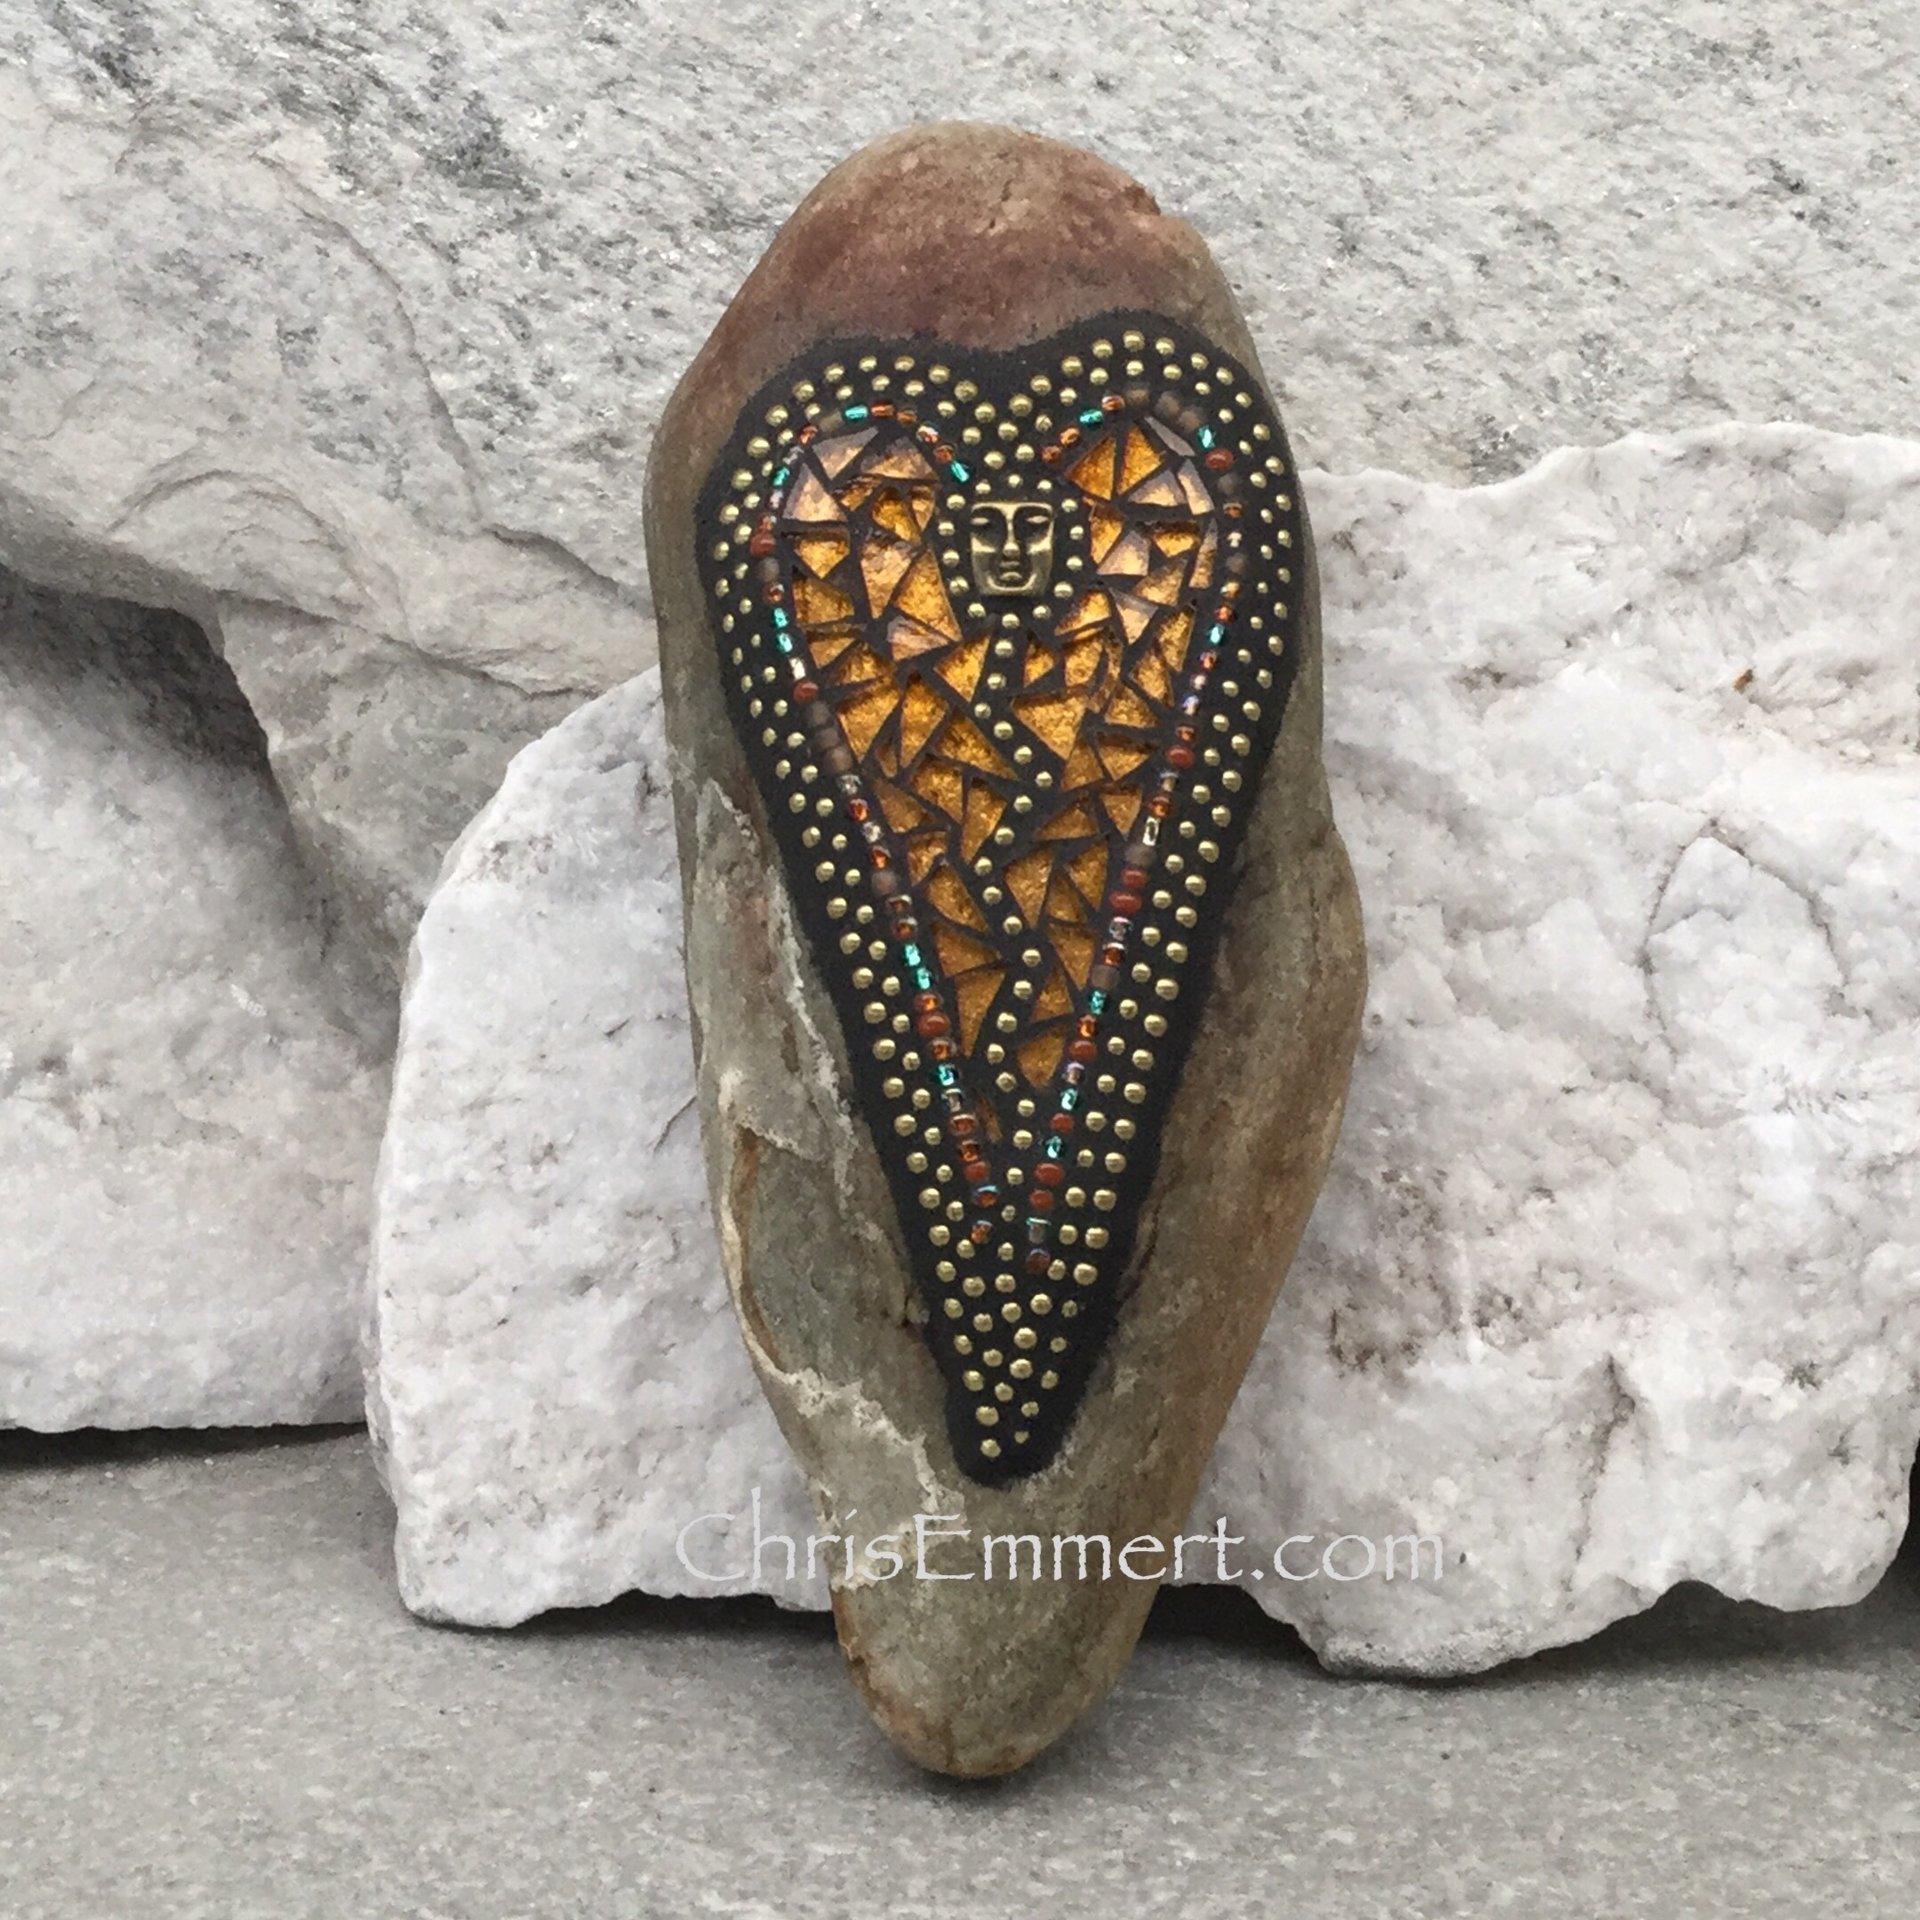 Amber Mosaic Heart, Mosaic Rock, Mosaic Garden Stone, Home Decor, Gardening Gift,